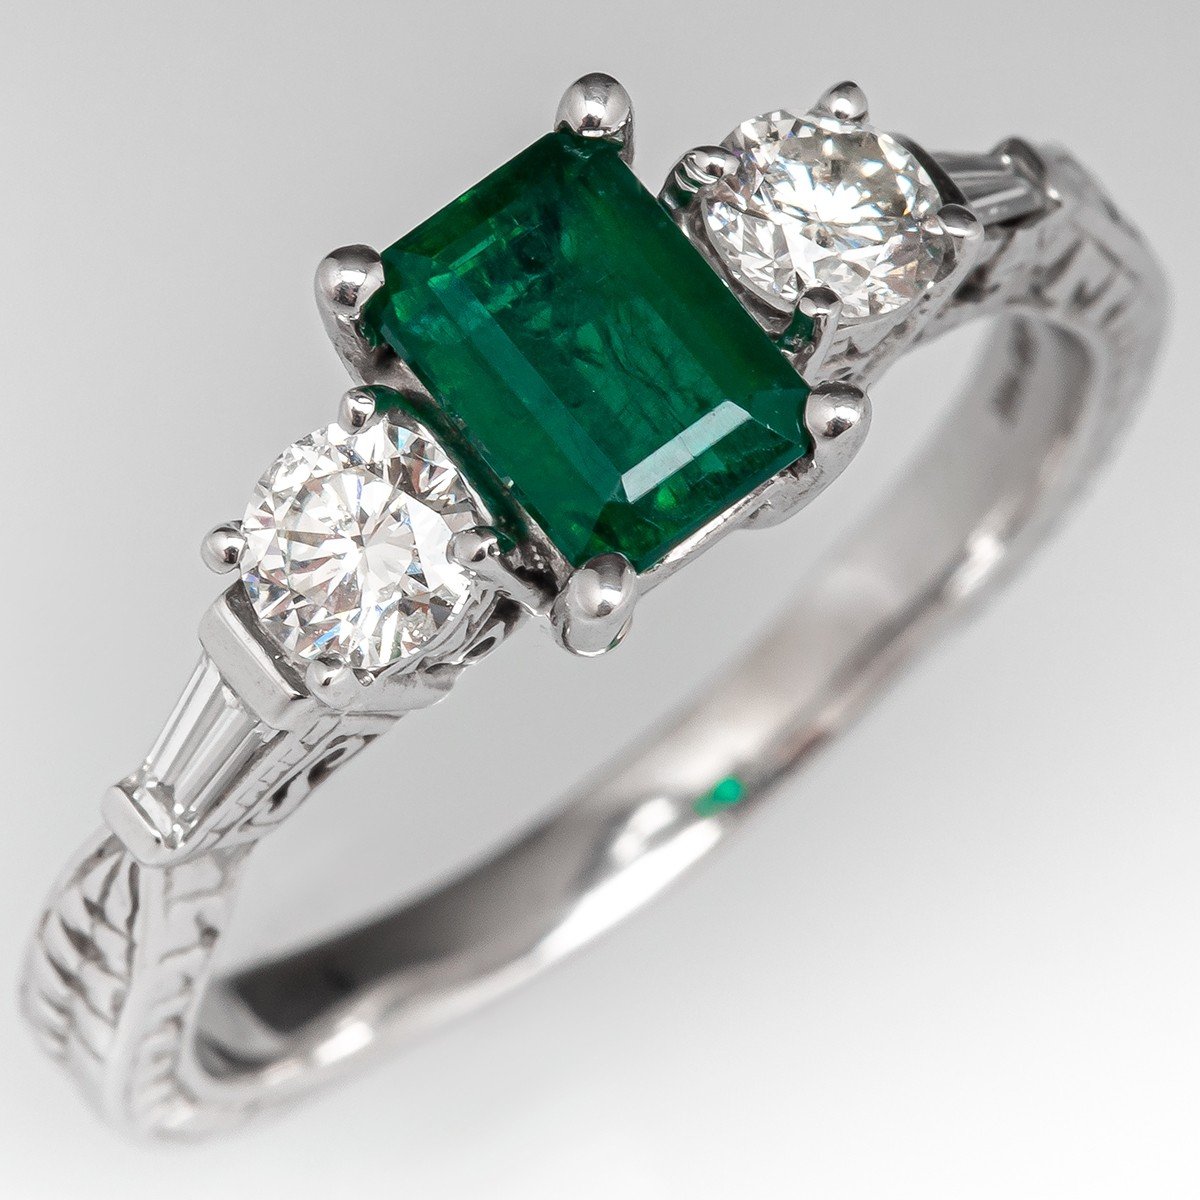 1 Carat Emerald Engagement Ring w/ Diamond Accents